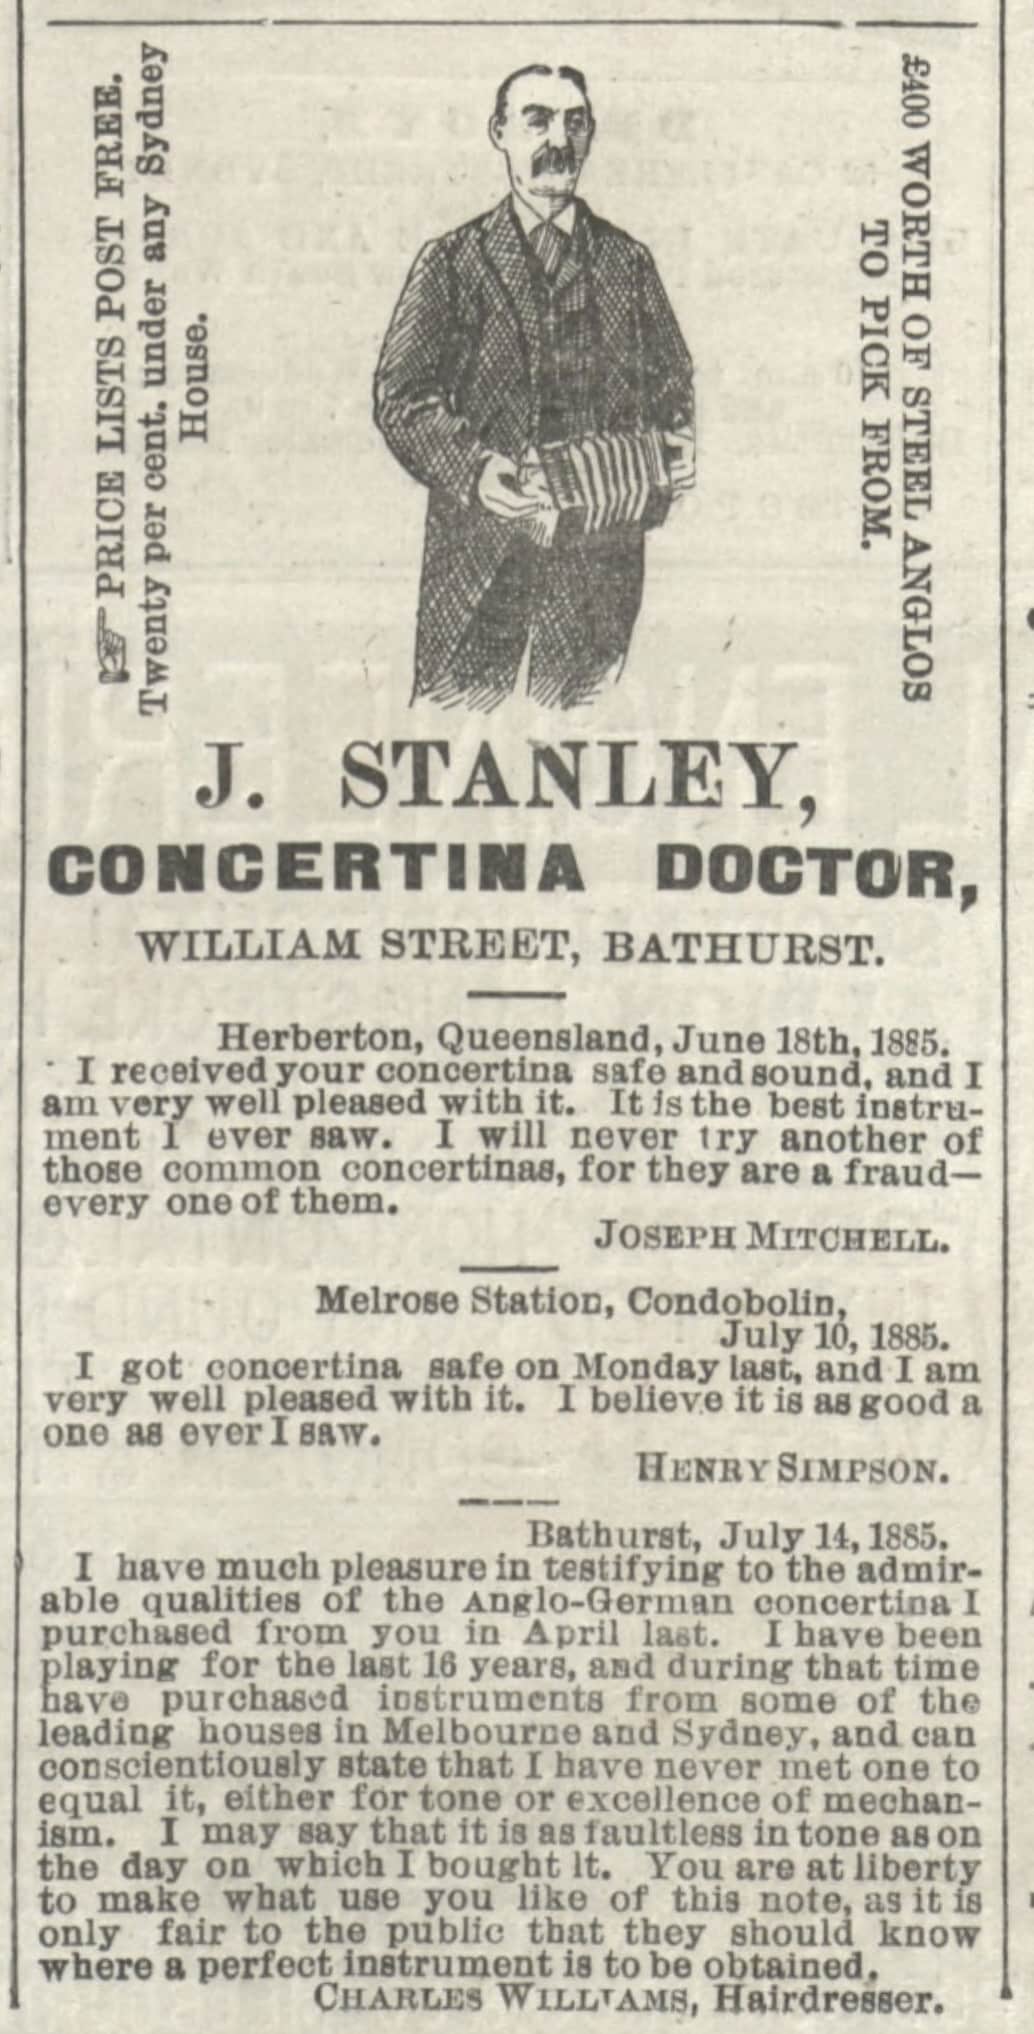 [Advertisement], The bulletin (22 August 1855), 8